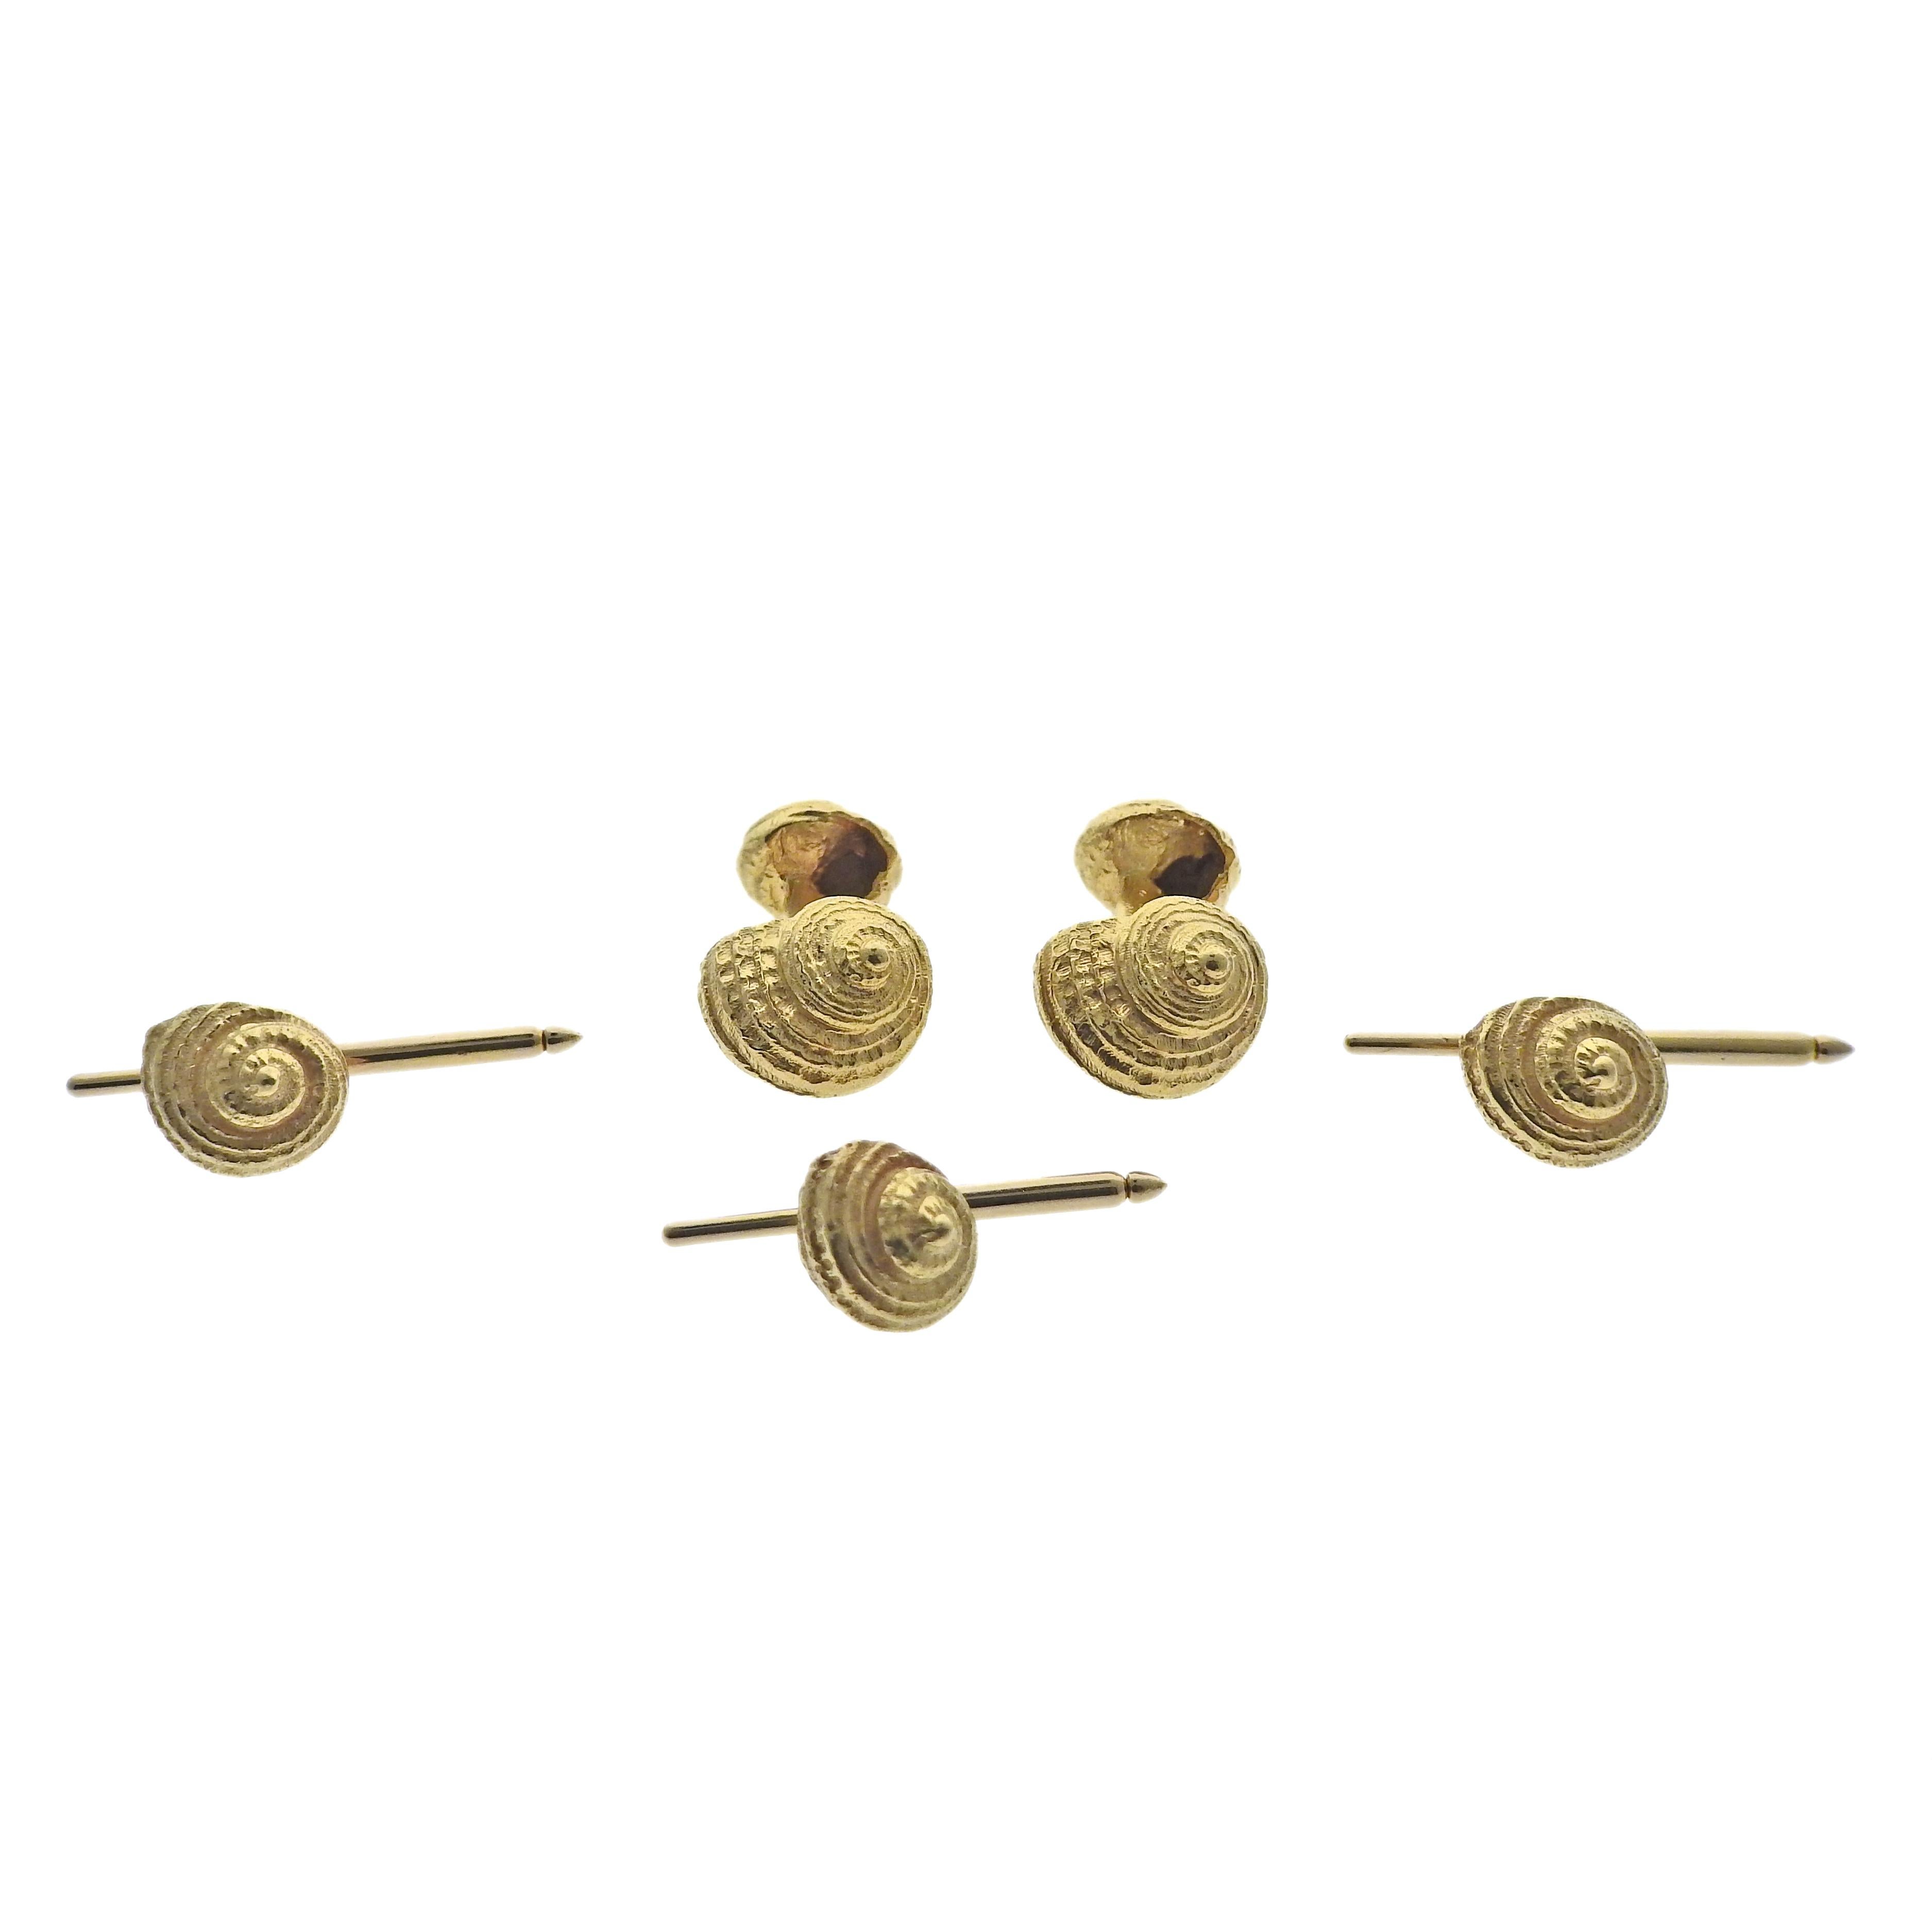 Vintage Tiffany & Co 18K yellow gold seashell cufflinks stud set. Cufflinks top measures 15.8mm x 13.2mm, back shells 12.6mm x 11.0mm; Stud is 12.0mm x 10.0mm. Marked: Tiffany & Co, 18K, French hallmarks.